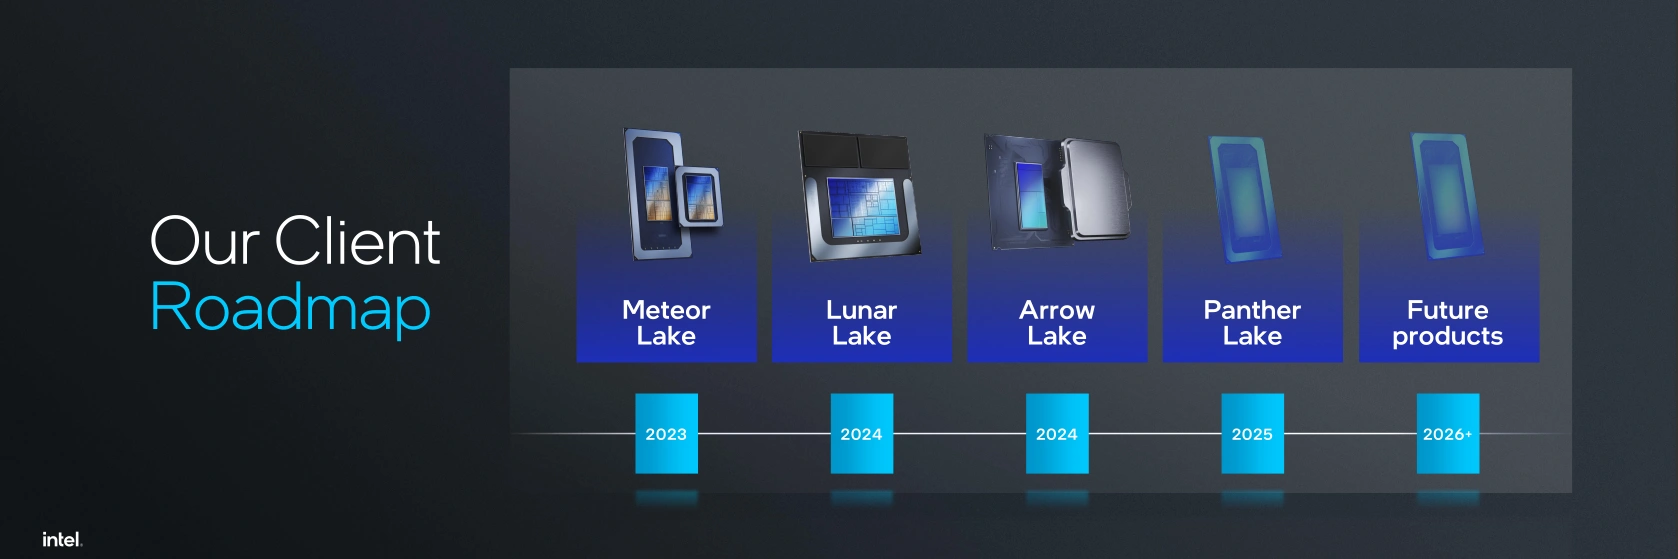 Intel Roadmap Client 2023 2026 Panther Lake